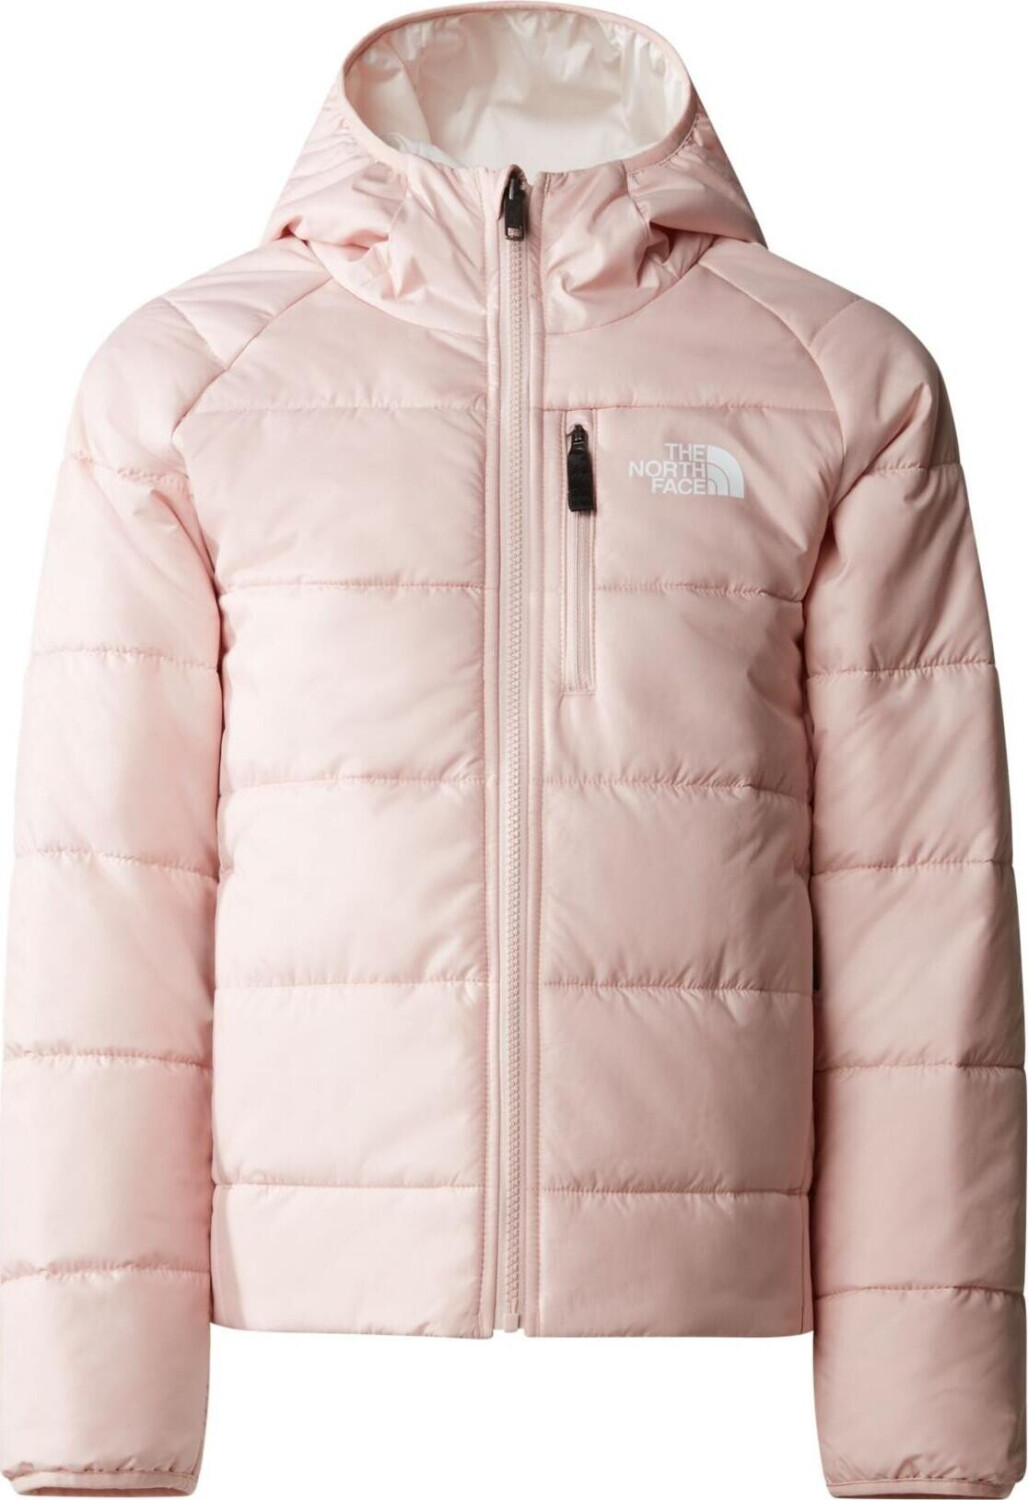 The North Face Girls Reversible Perrito Jacket (NF0A82D9) pink moss  gardenia white ab 57,50 € | Preisvergleich bei